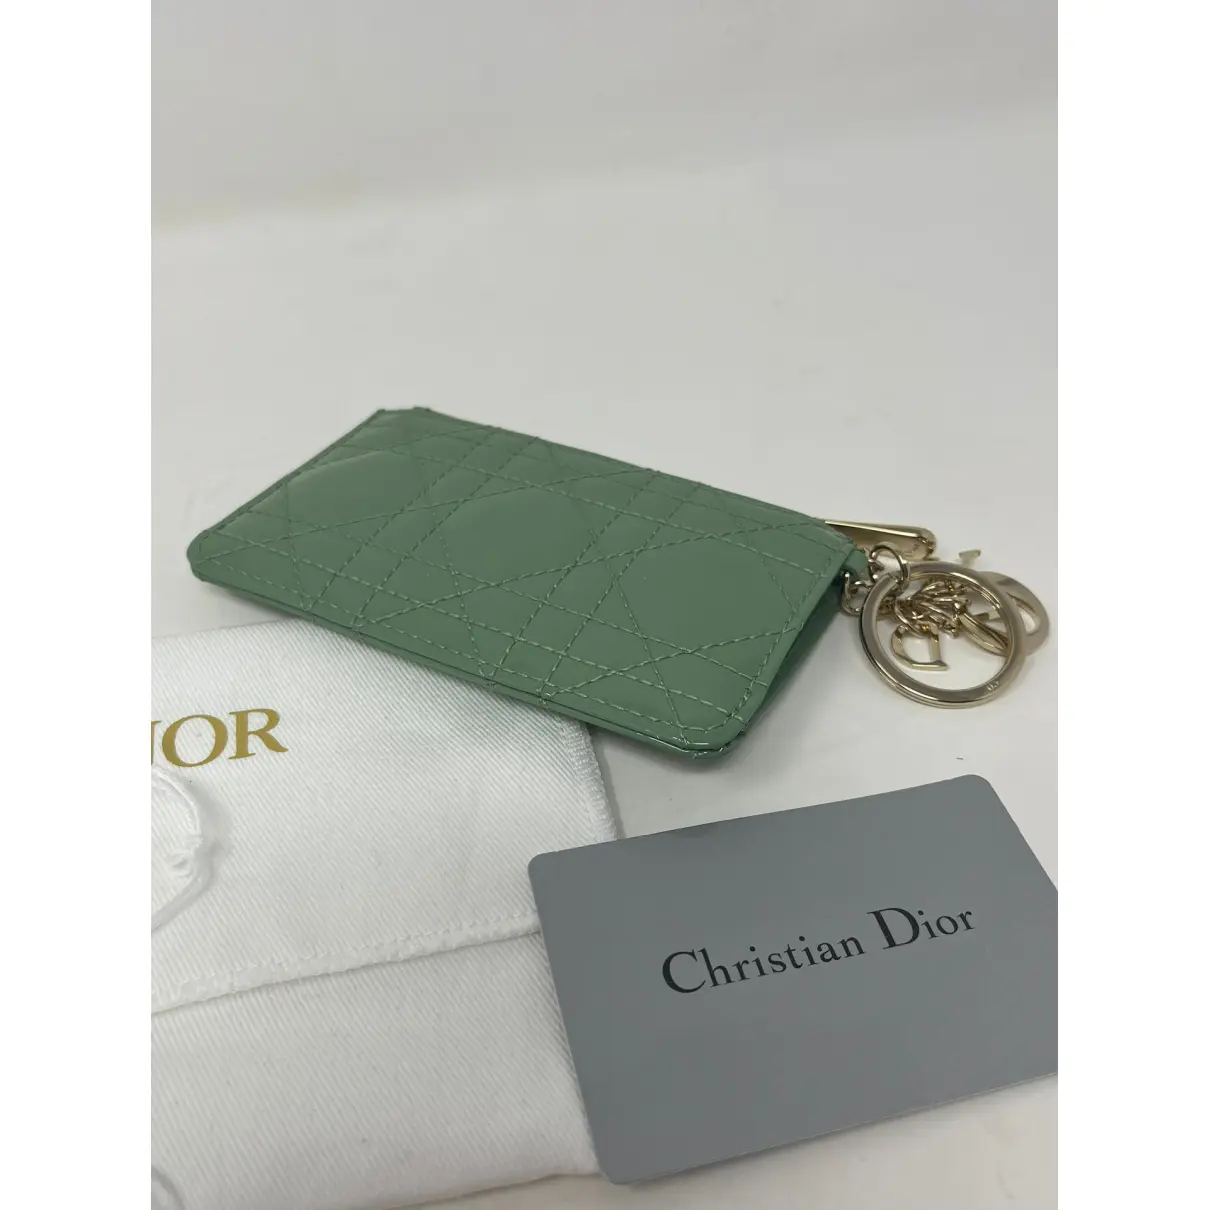 Lady Dior patent leather purse Dior